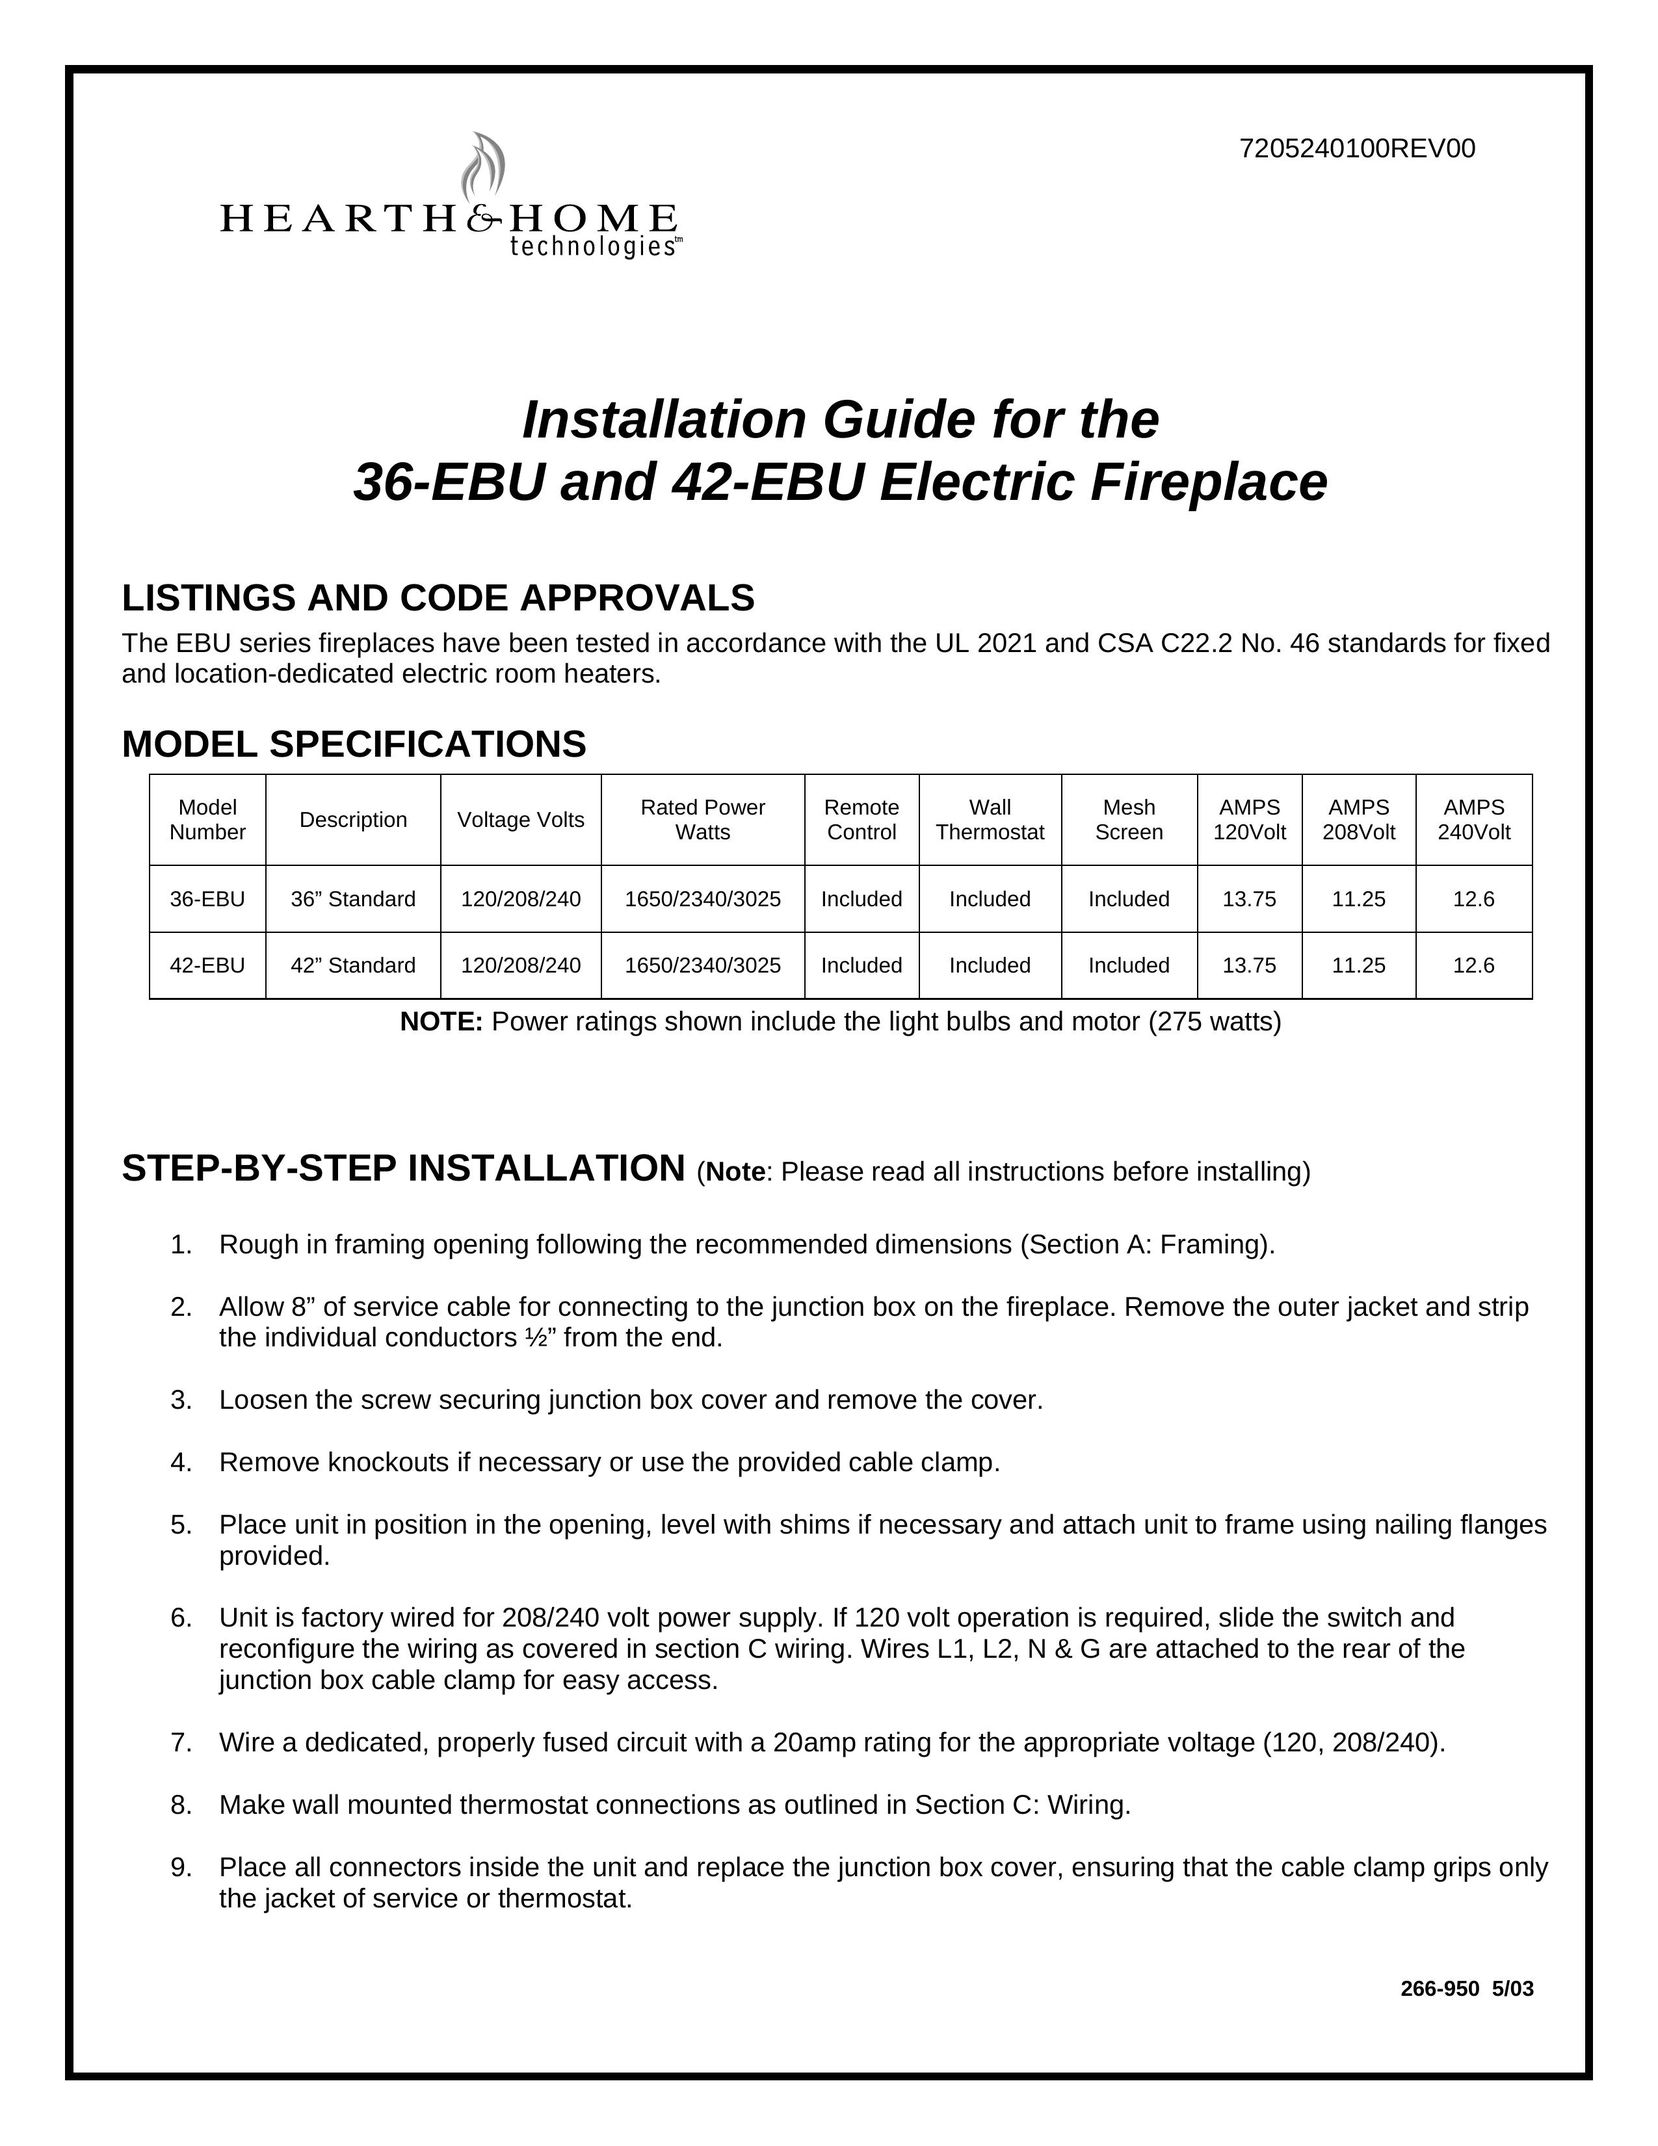 Hearth and Home Technologies 36EBU Indoor Fireplace User Manual